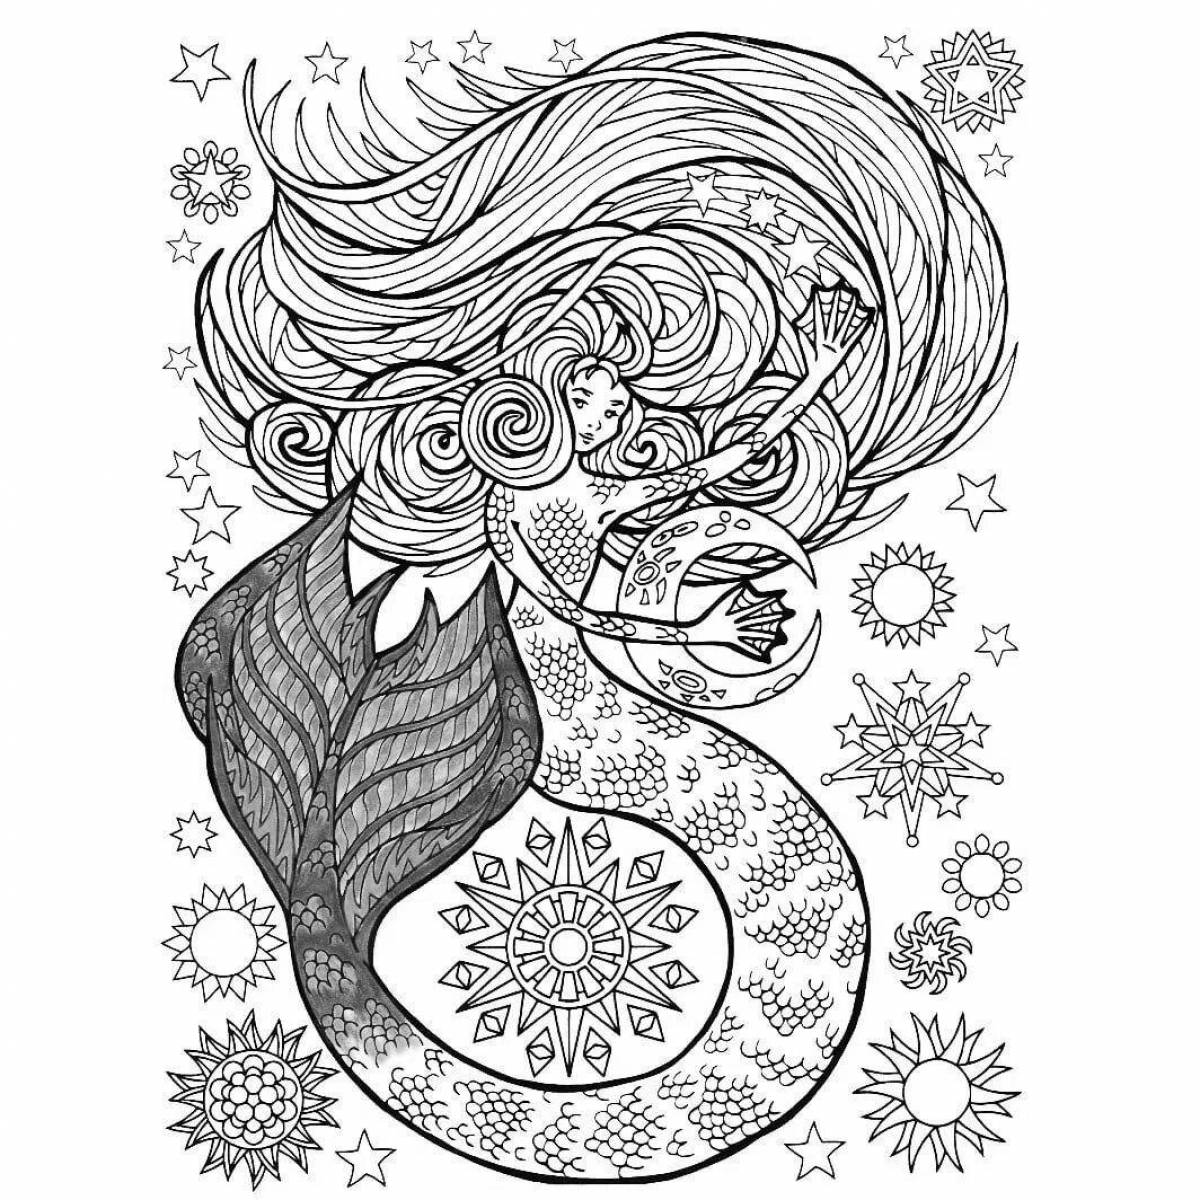 Amazing anti-stress mermaid coloring book